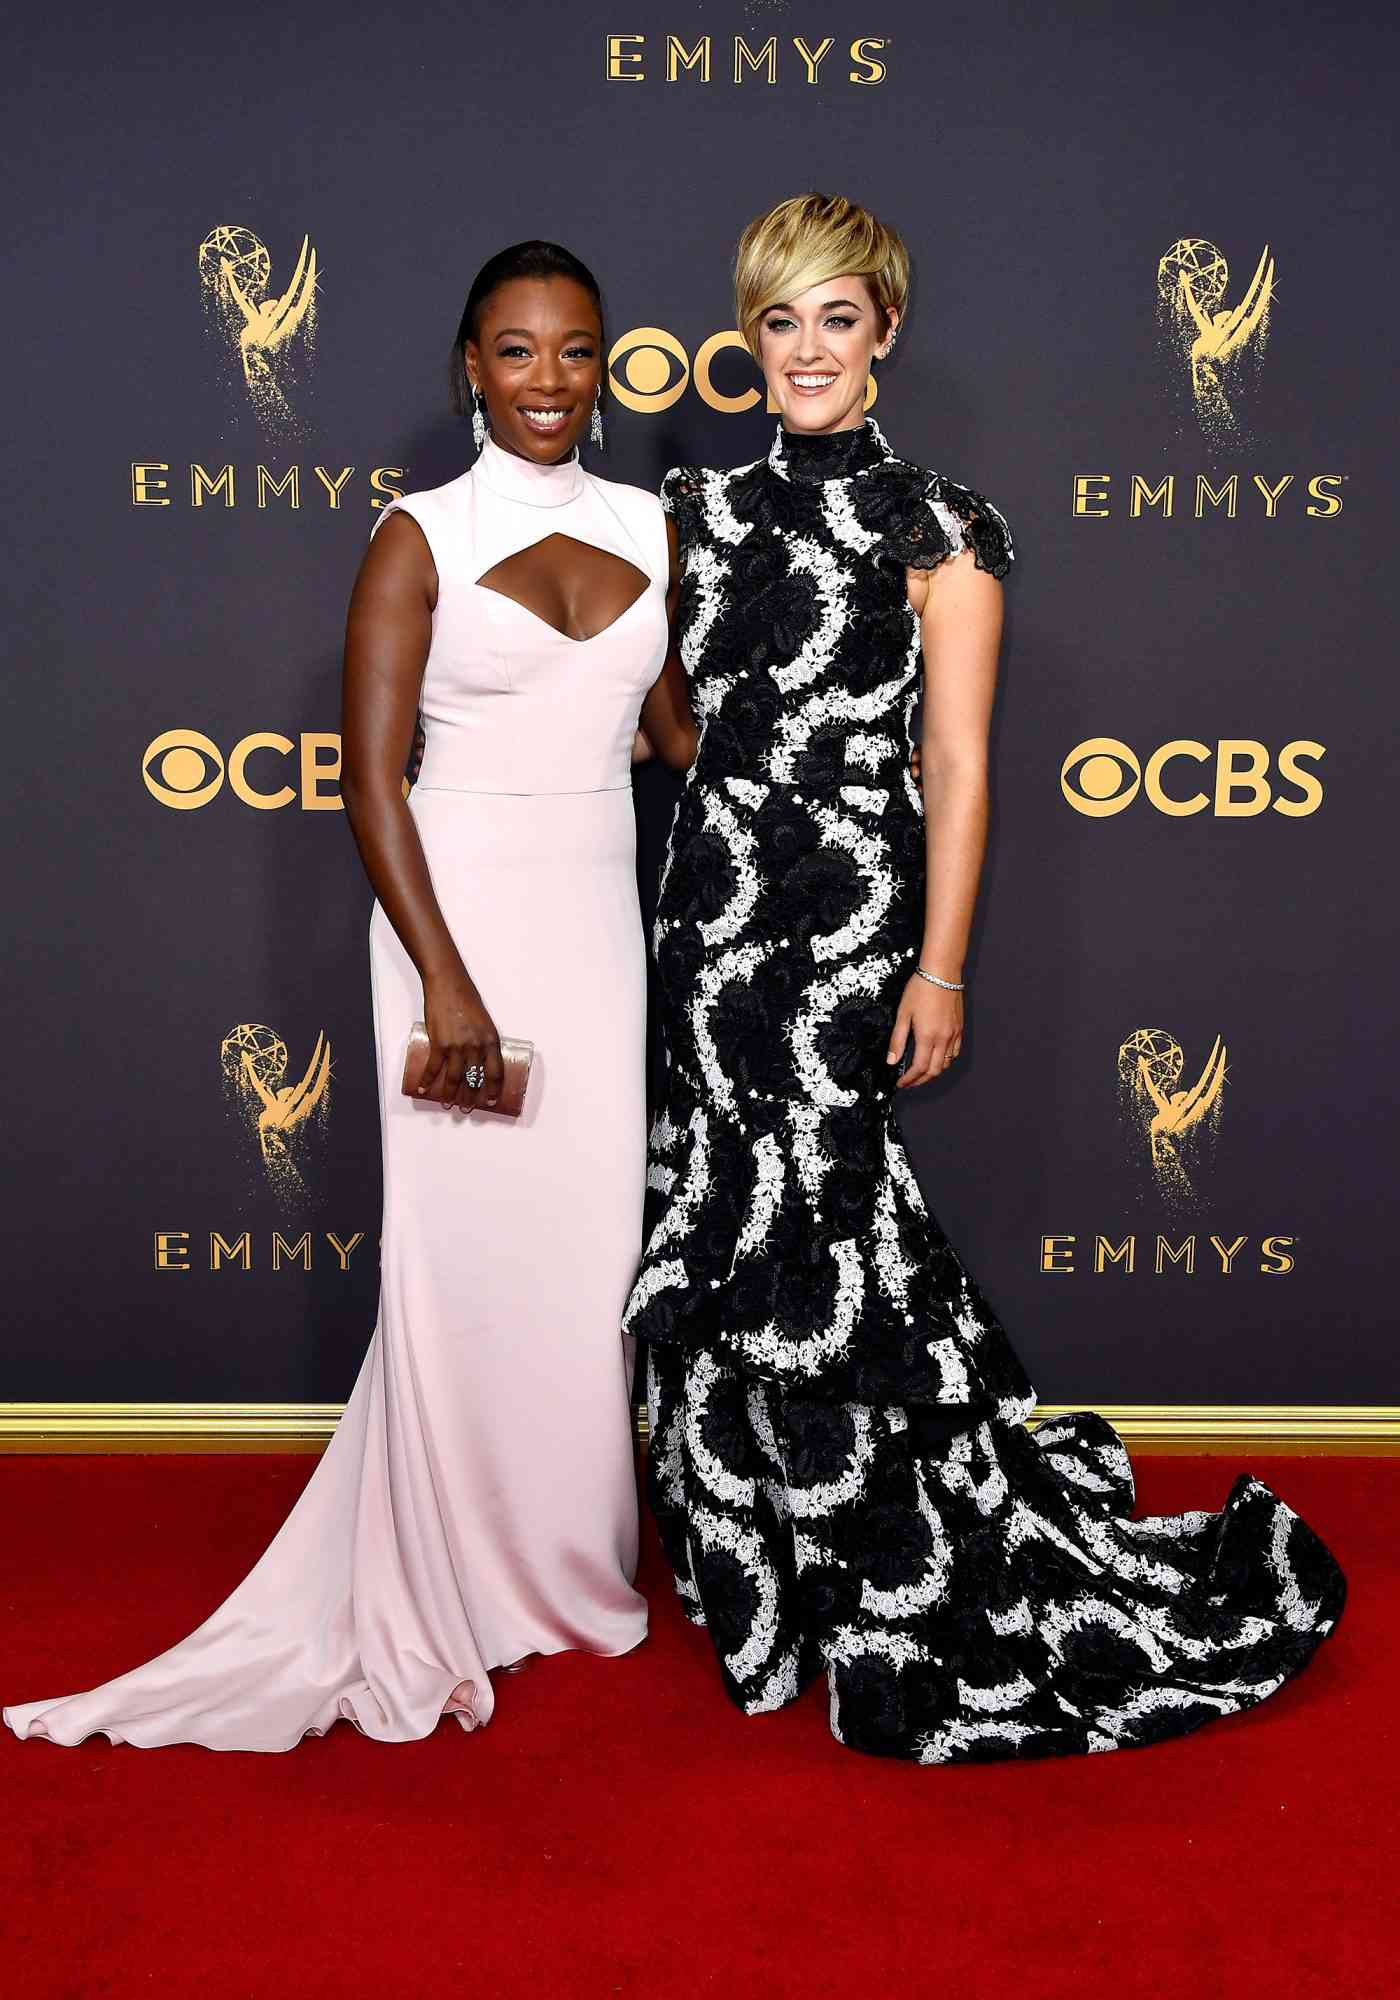 Samira Wiley and Lauren Morelli Emmys 2017